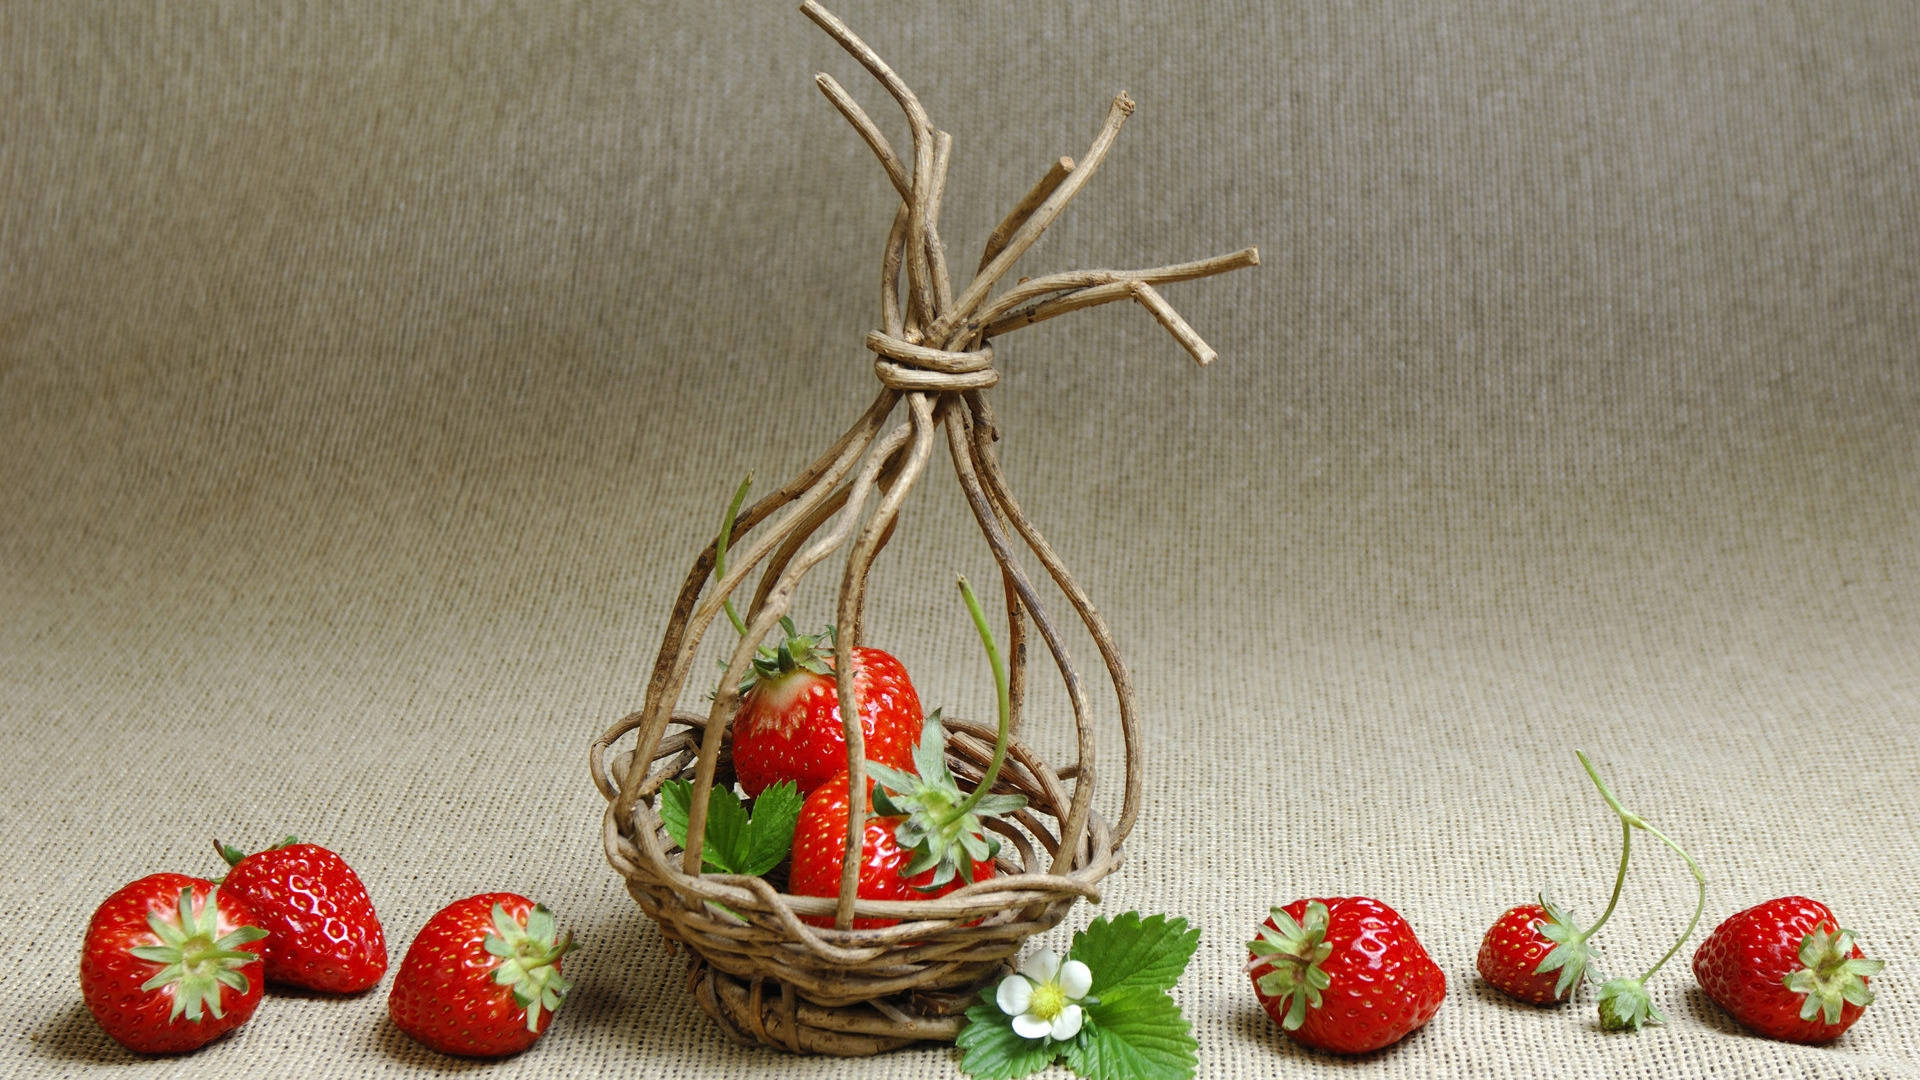 Woven Nest With Strawberry Desktop Wallpaper